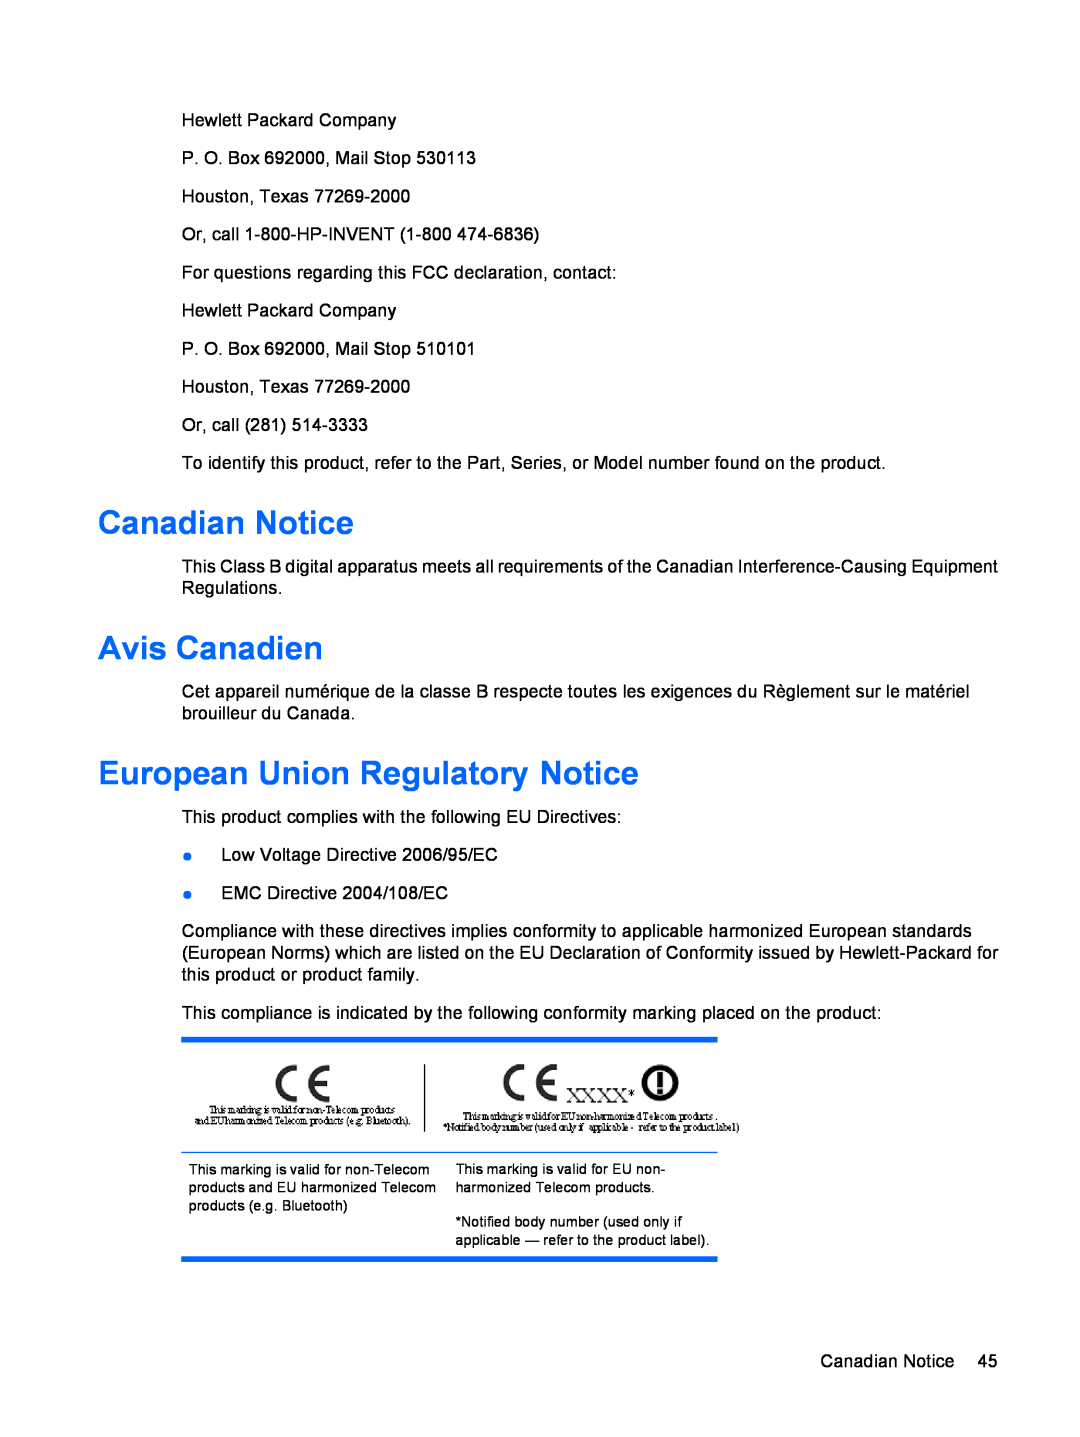 HP LP2275w manual Canadian Notice, Avis Canadien, European Union Regulatory Notice 